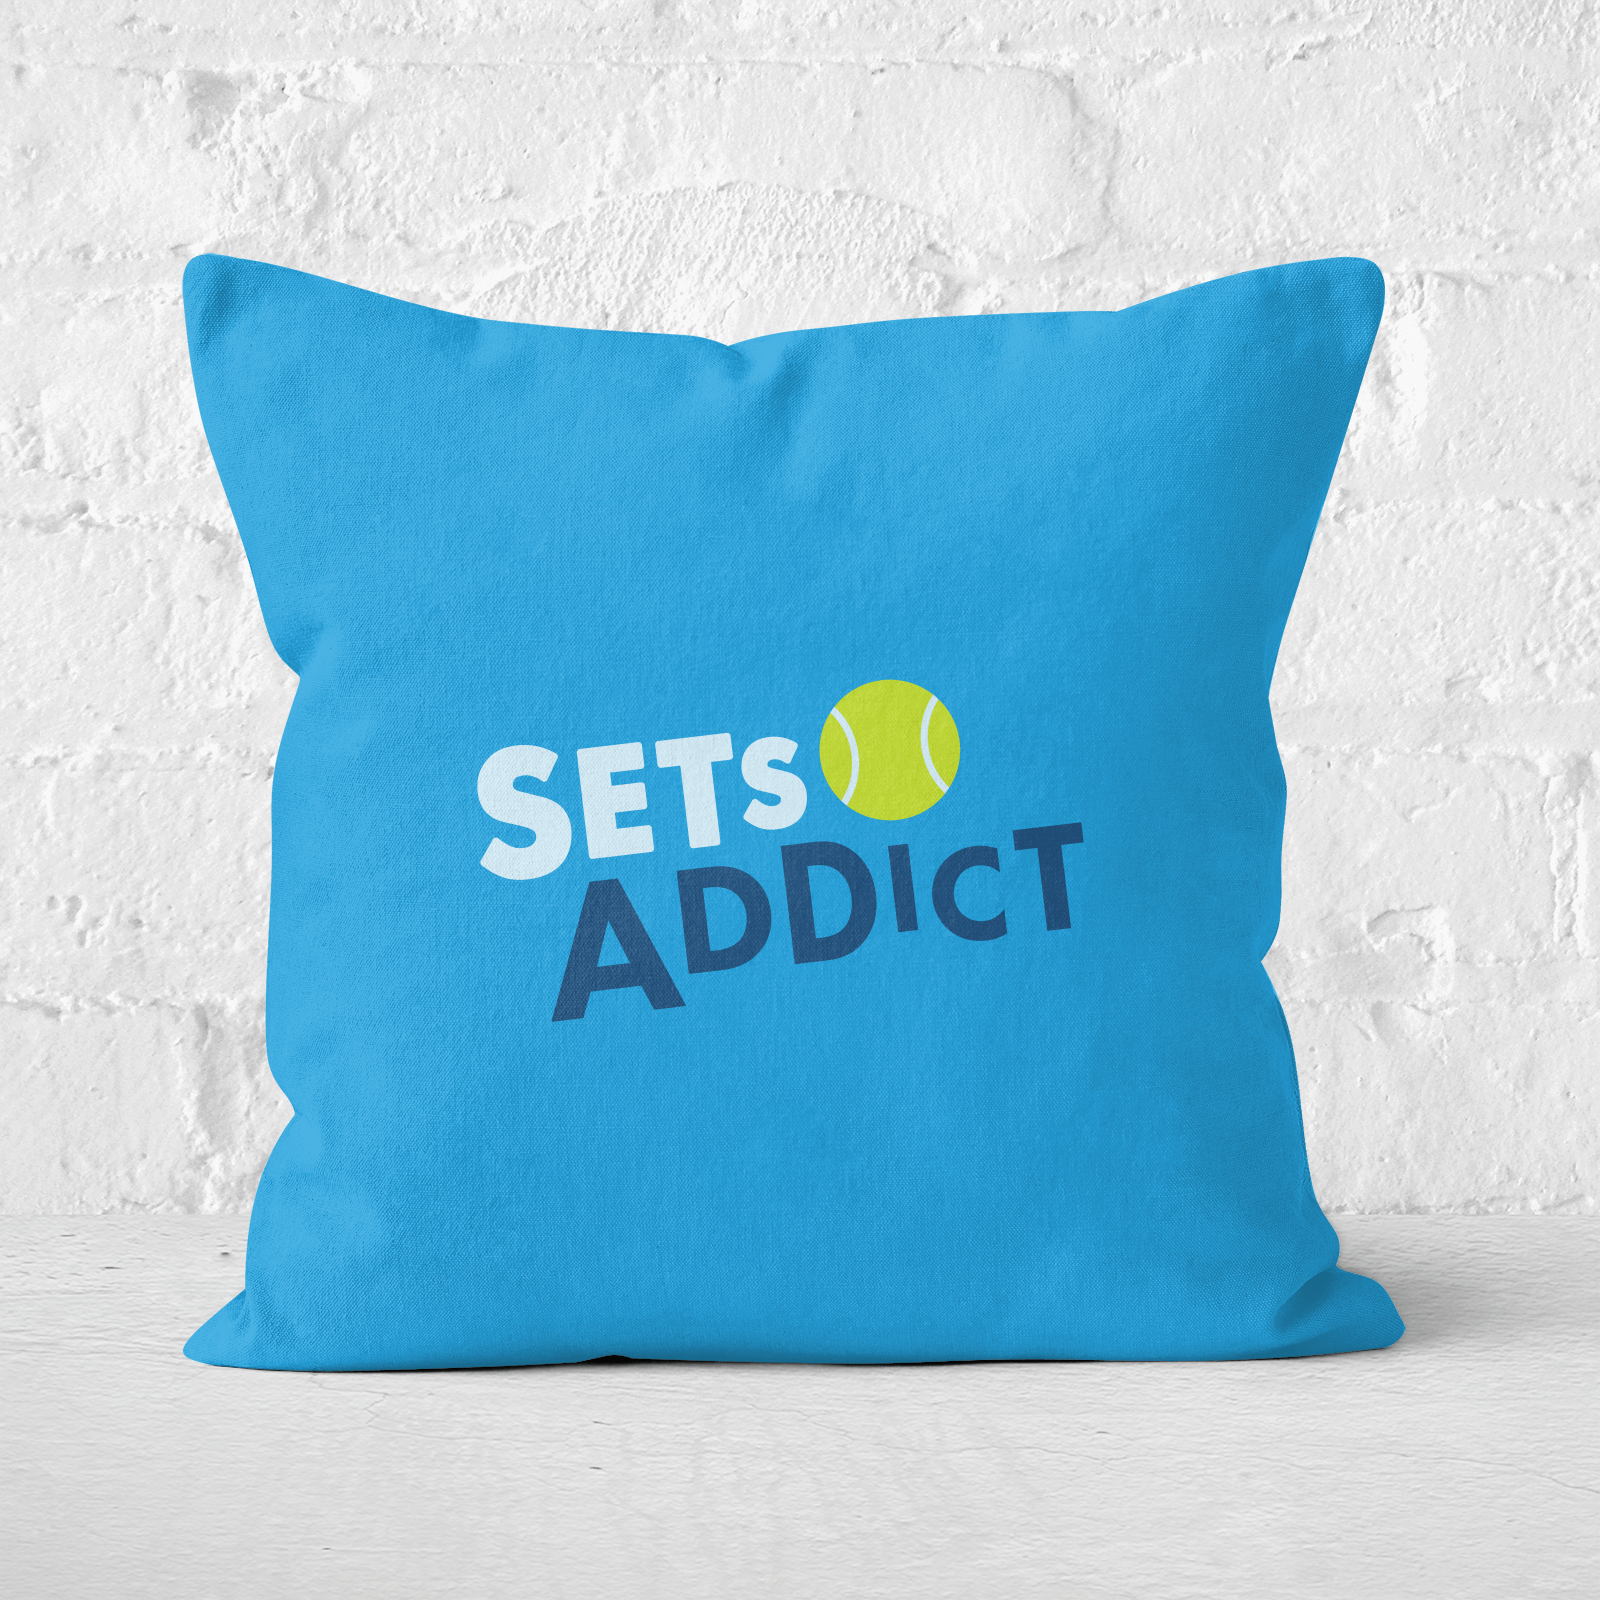 Set Addicts Square Cushion   50x50cm   Soft Touch